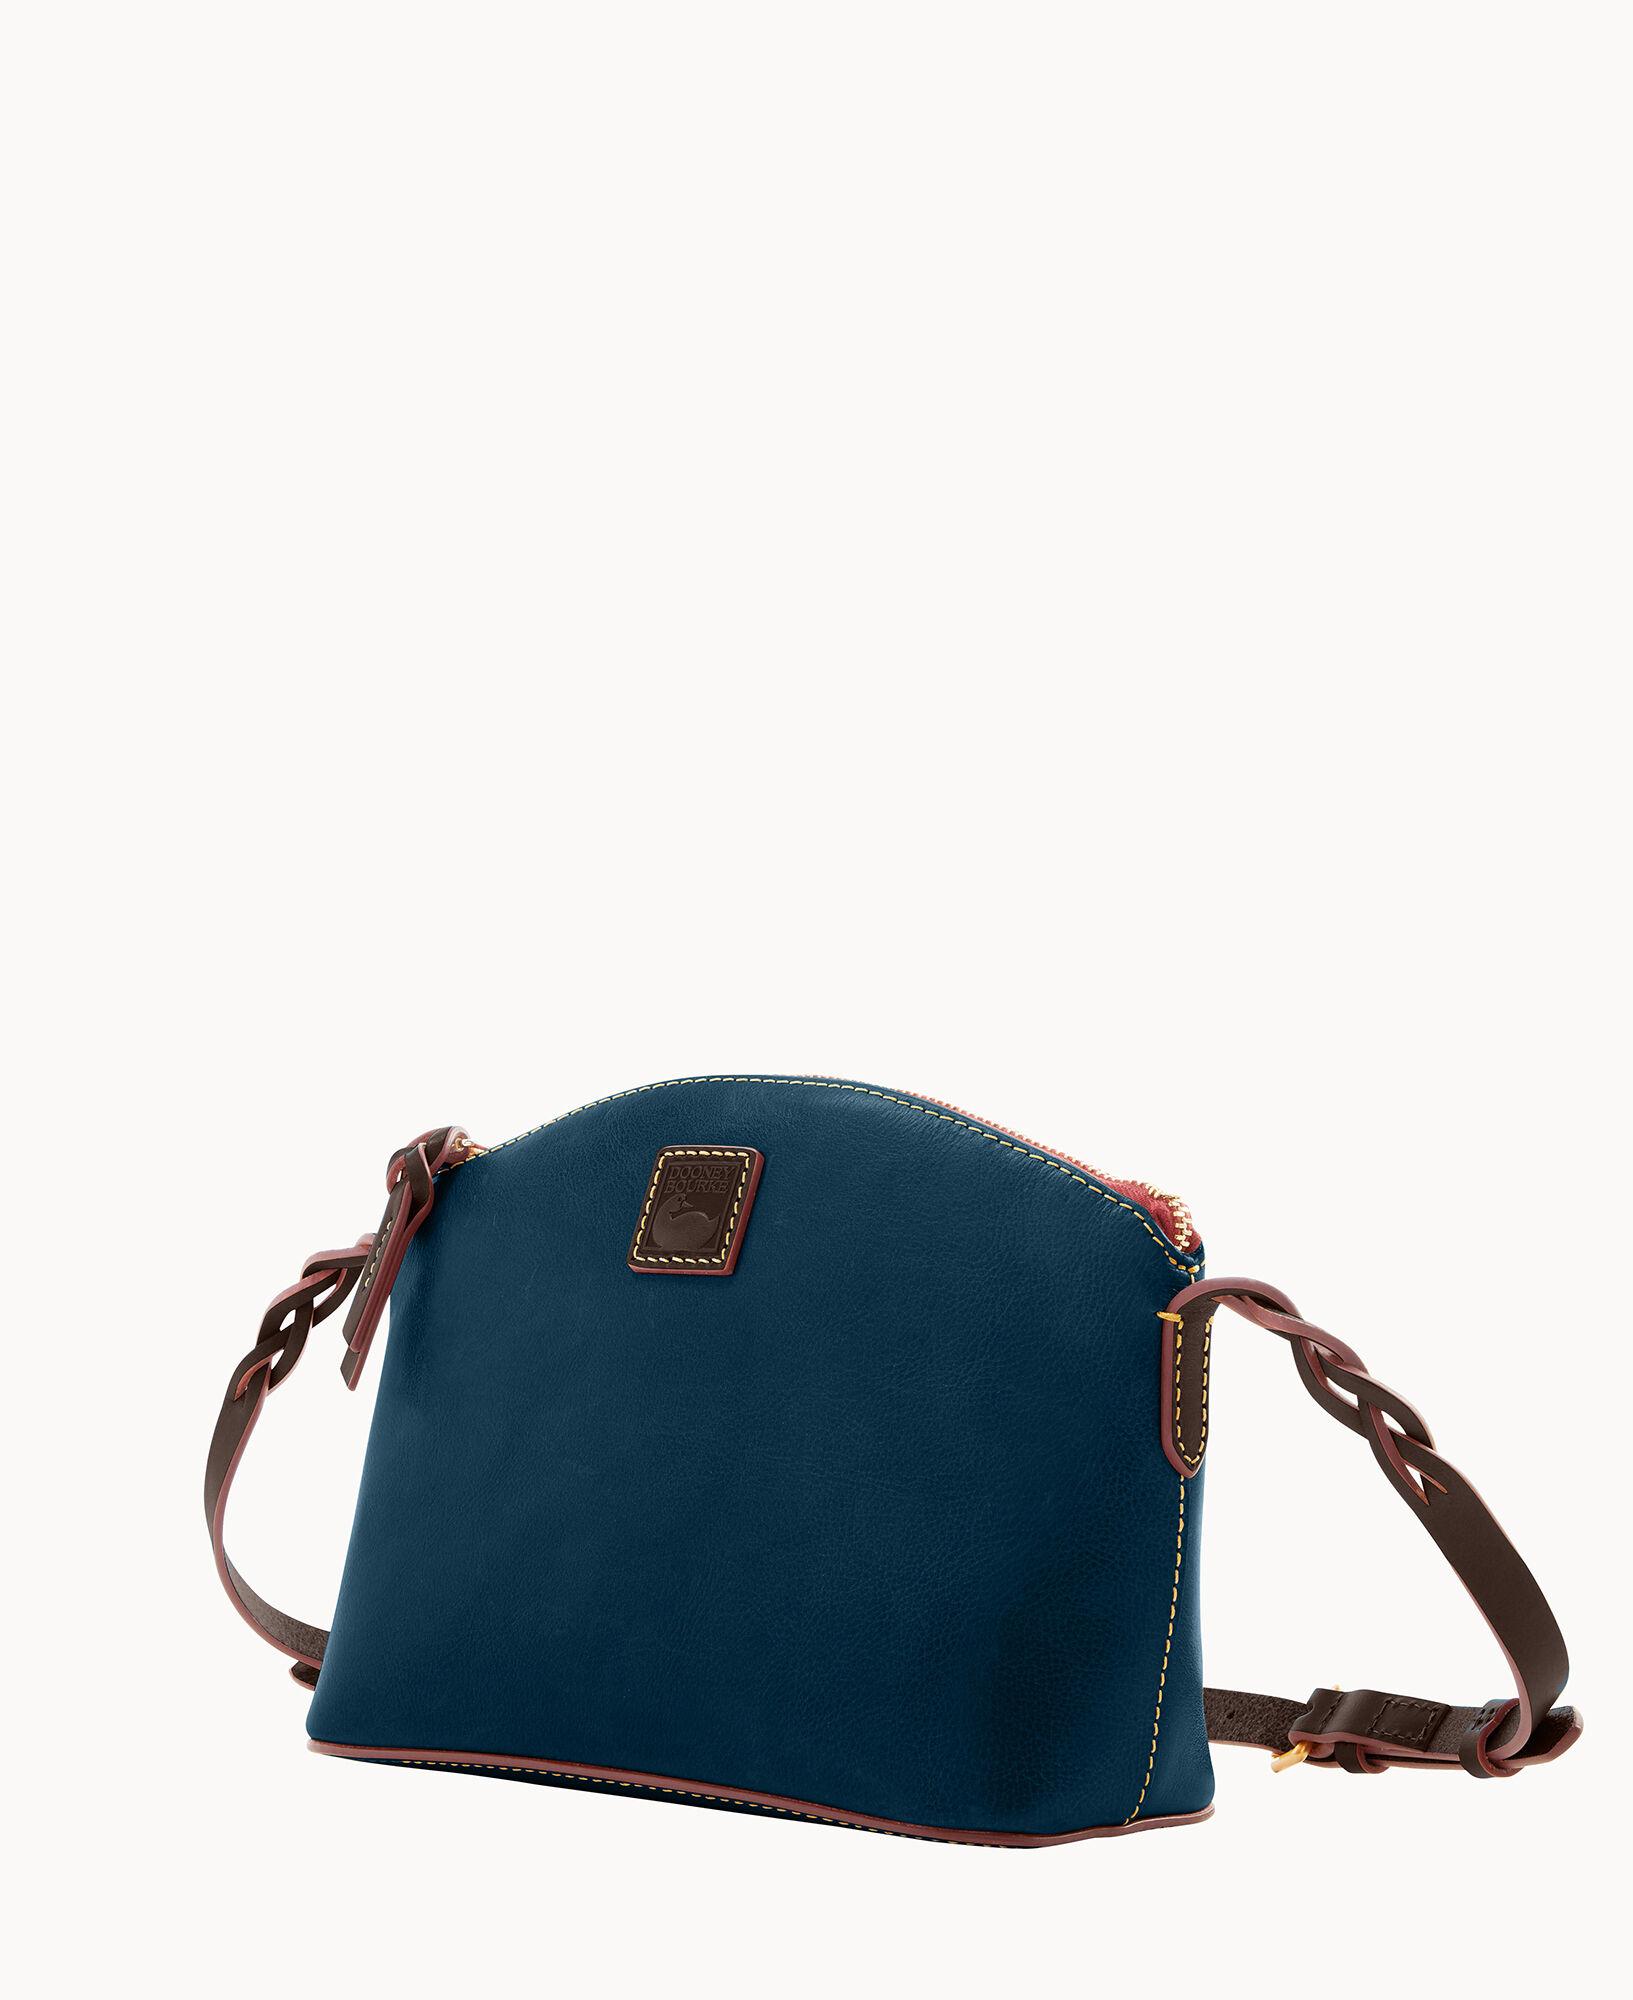 Florentine crossbody bag